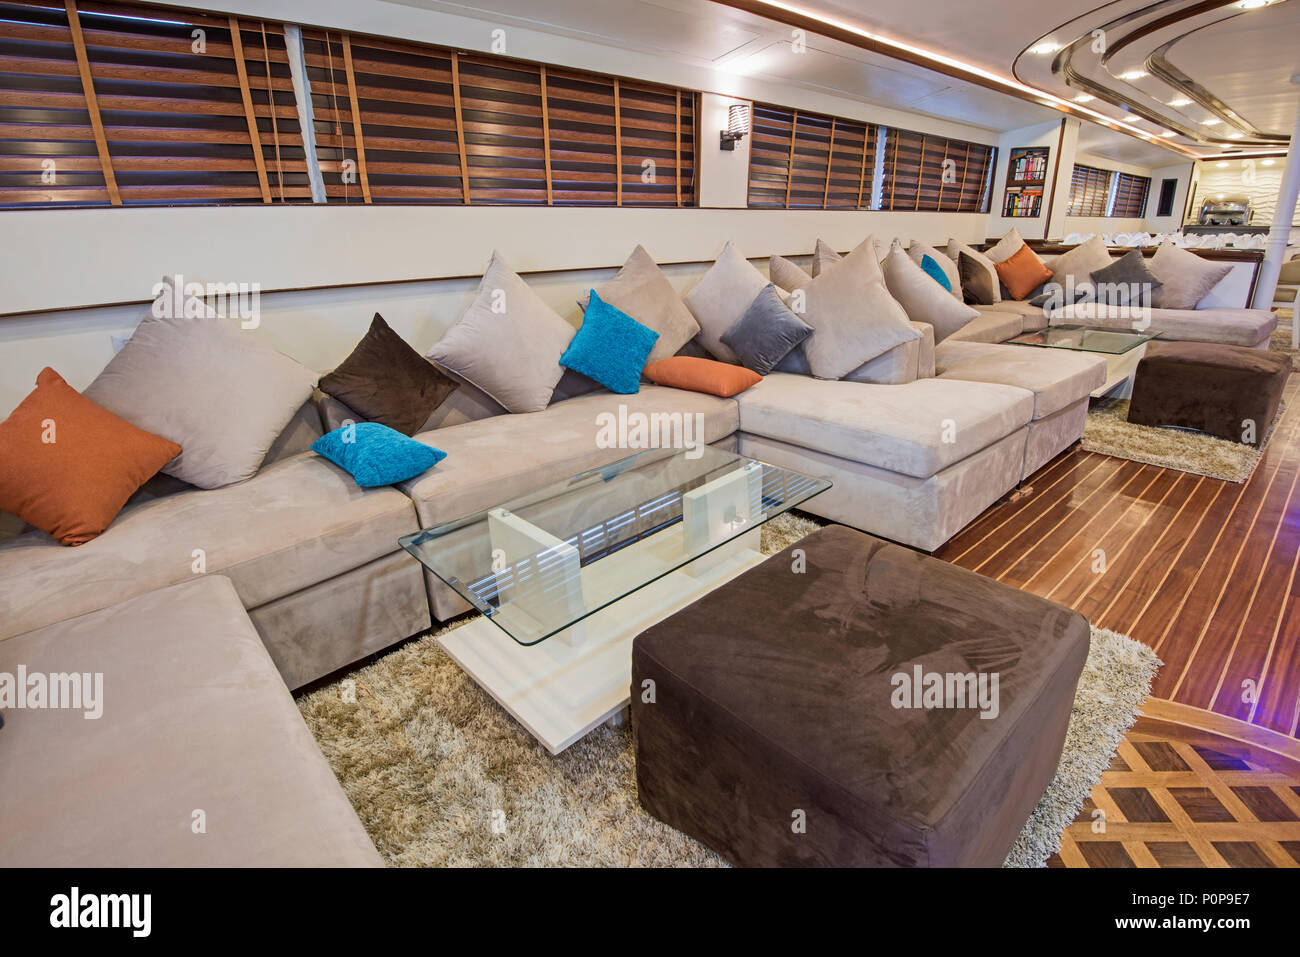 Interior design furnishing decor of the salon area in a large luxury motor yacht Stock Photo